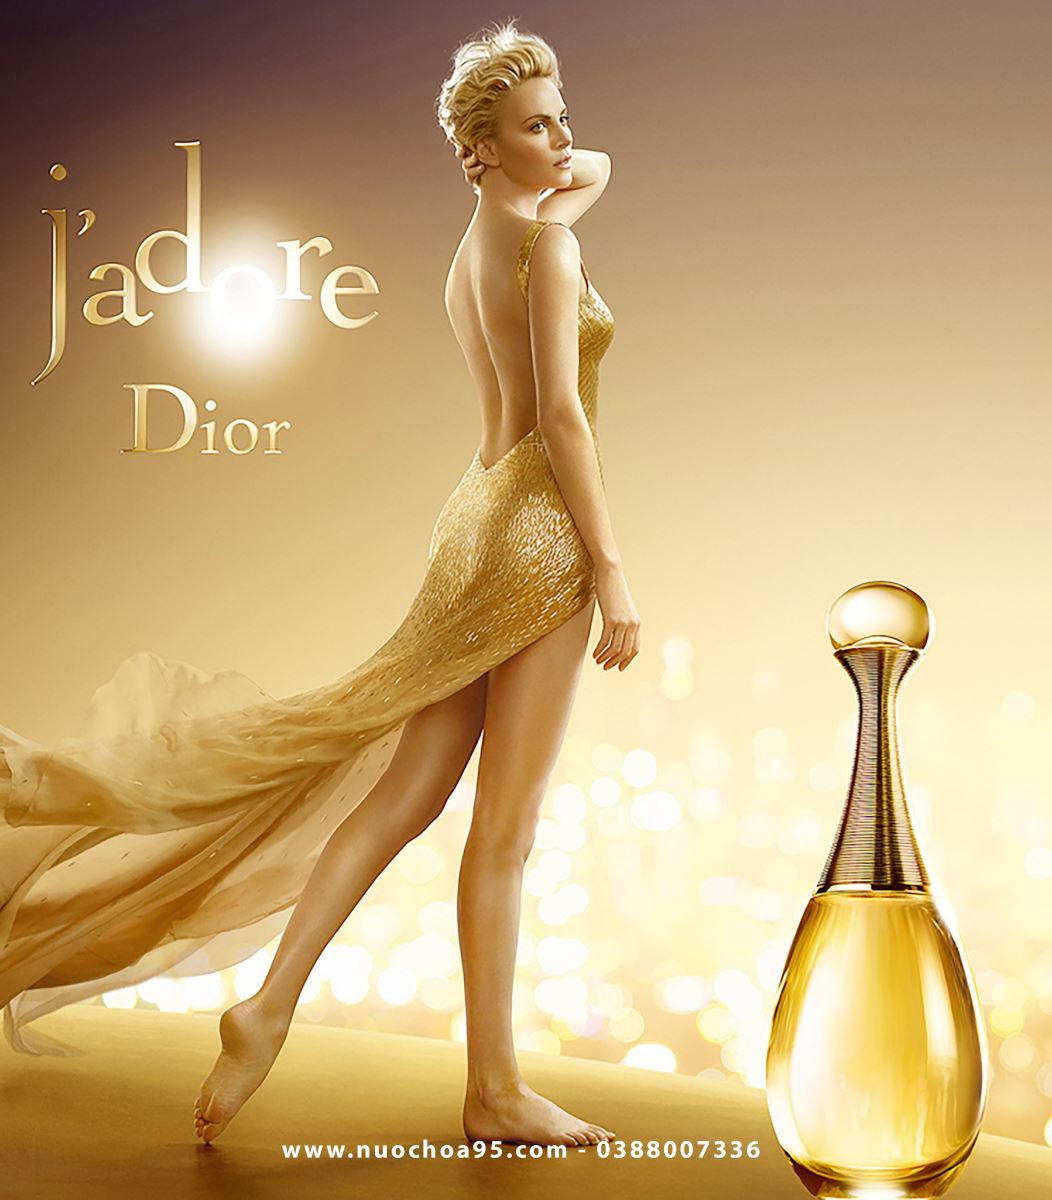 Nước hoa J'adore Dior - Ảnh 3